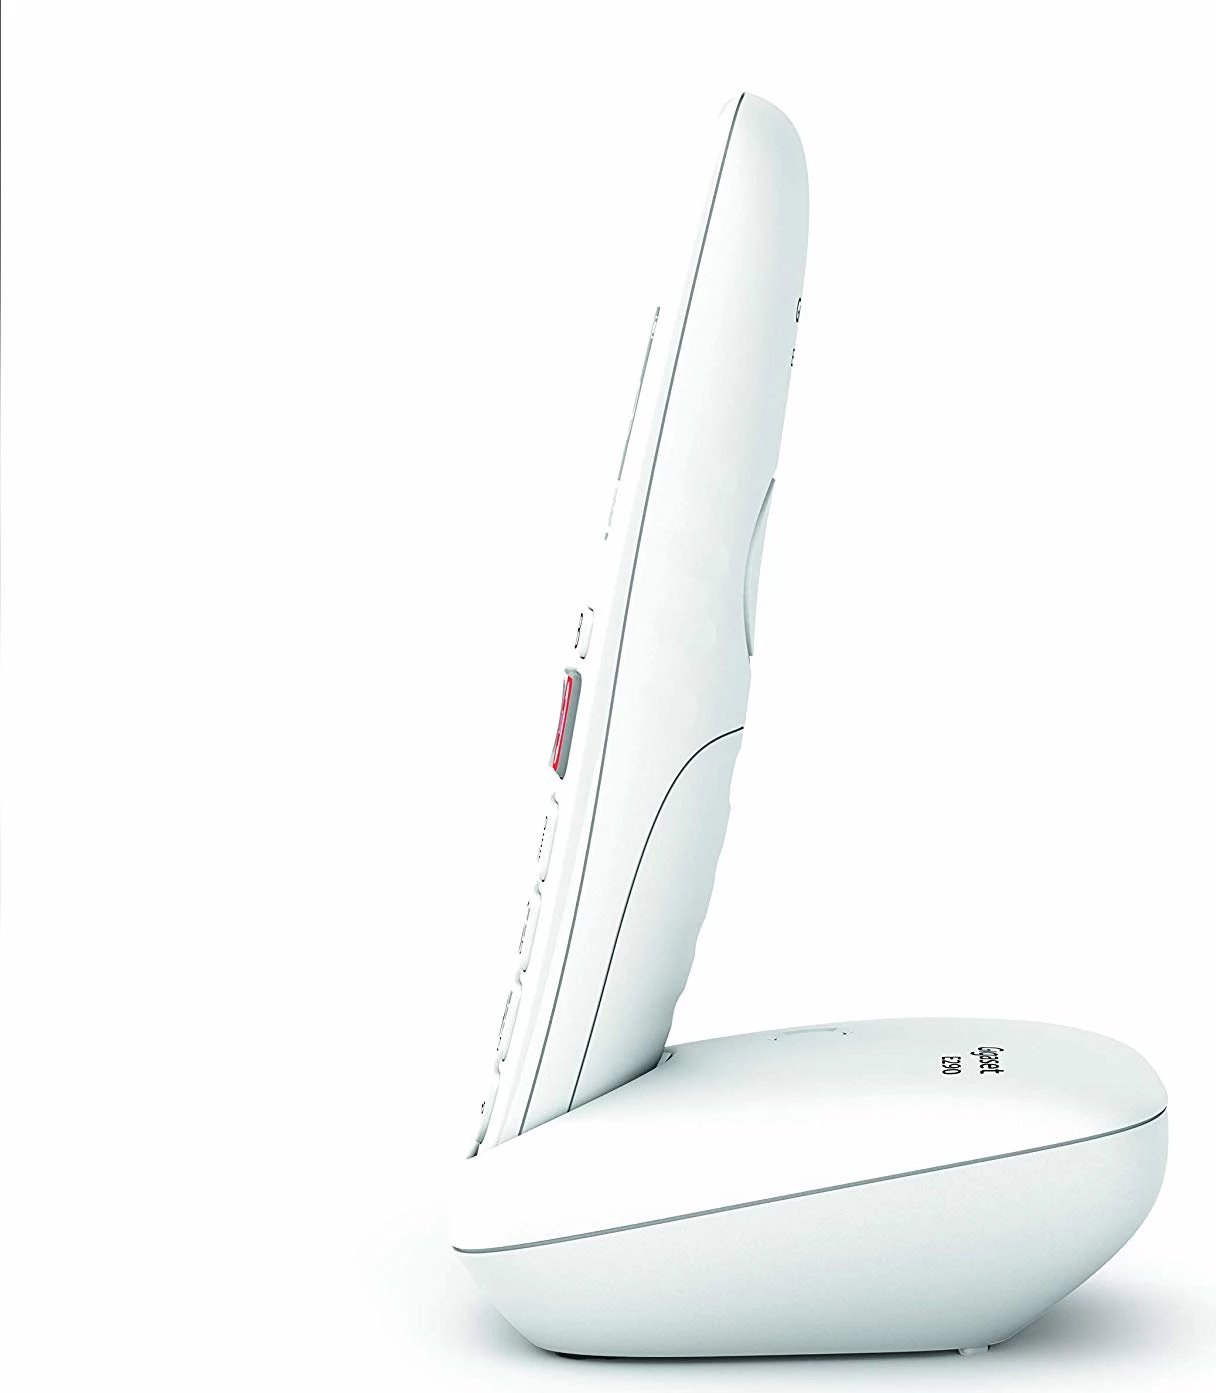 Telefon Gigaset Landline E290, Wireless, i bardhë